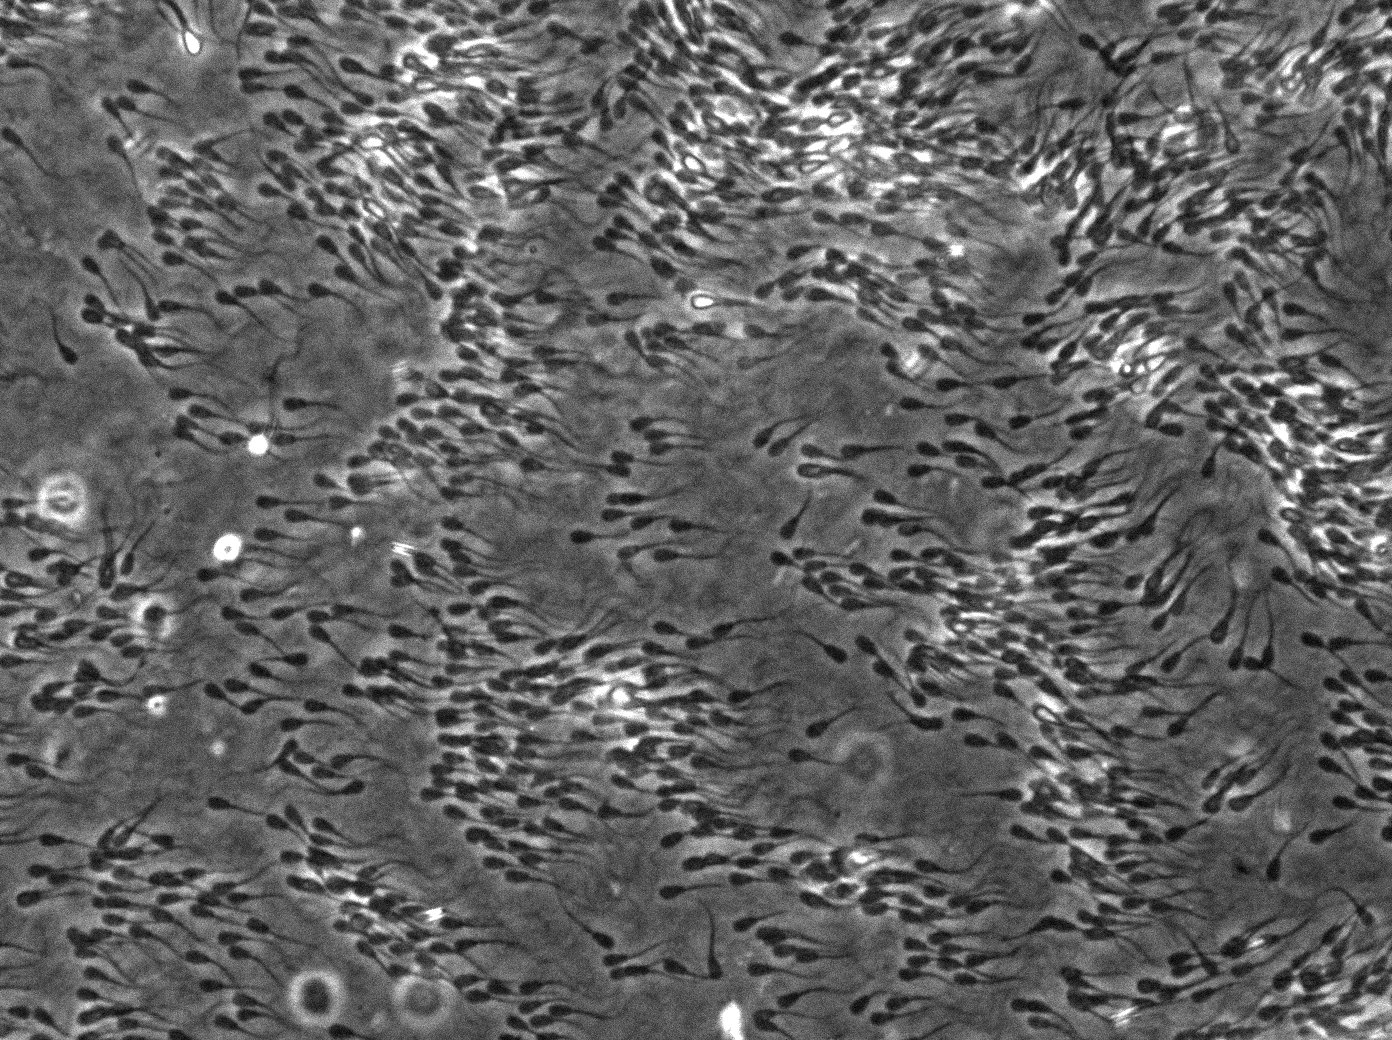 A scientific image of flocking sperm cells